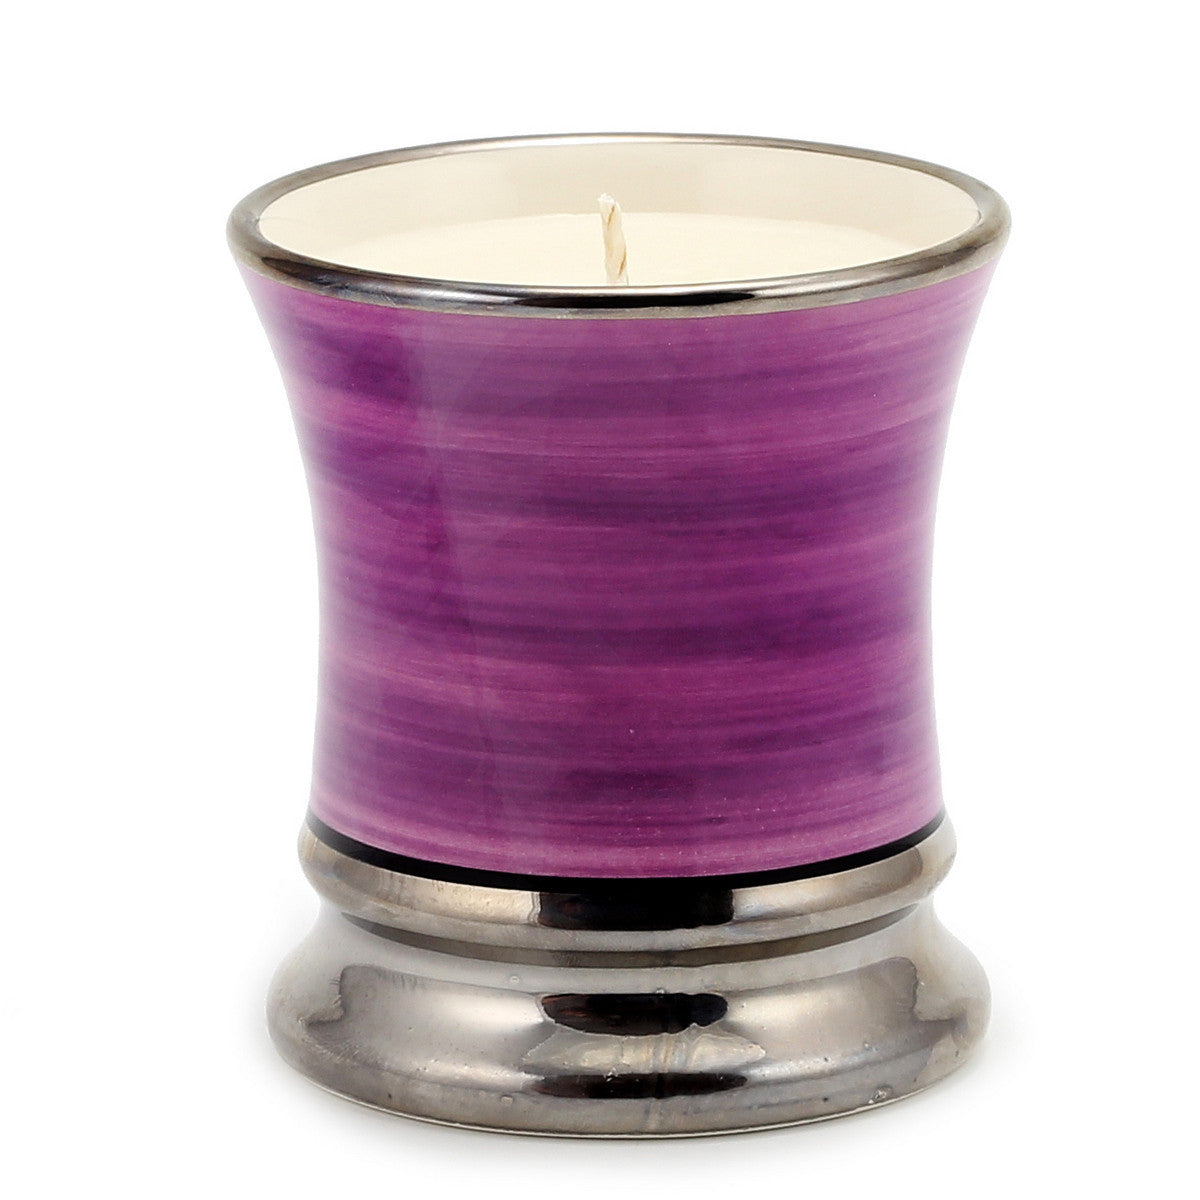 DERUTA CANDLES: Deluxe Precious Cup Candle ~ Coloris Viola Design ~ Pure Platinum Rim - Artistica.com